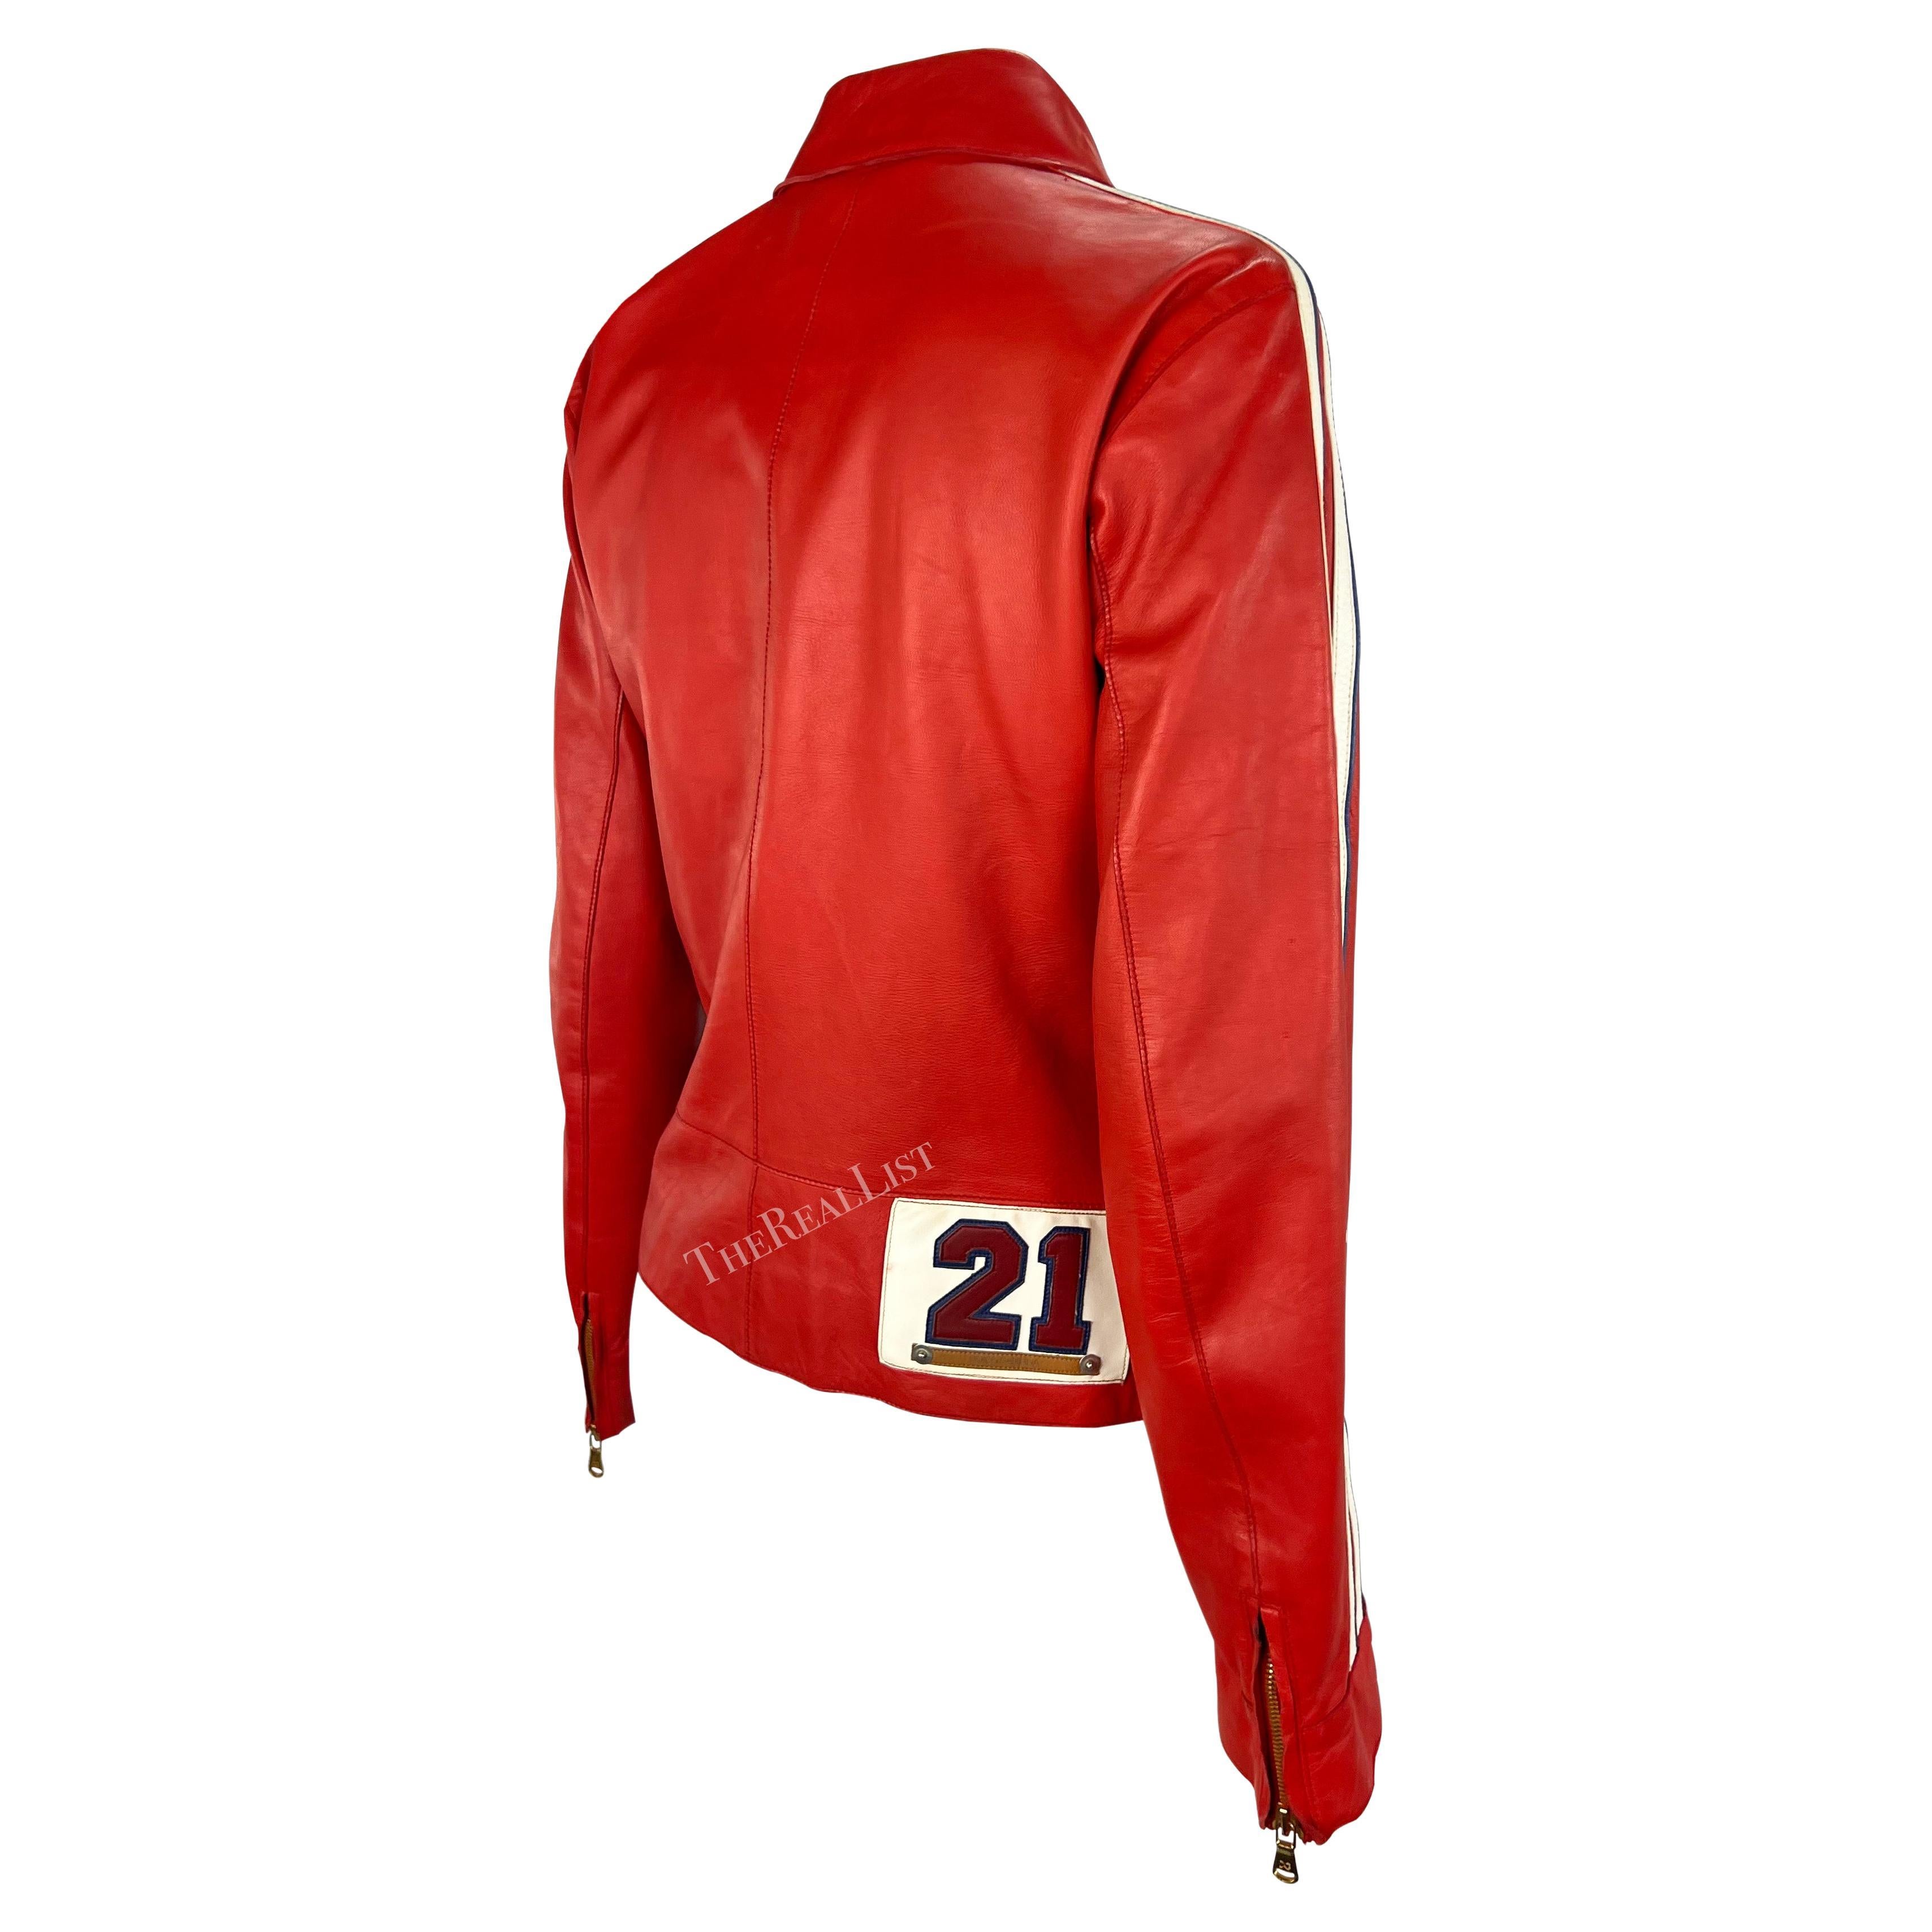 Veste en cuir rouge style moto Dolce & Gabbana S/S 2001 en vente